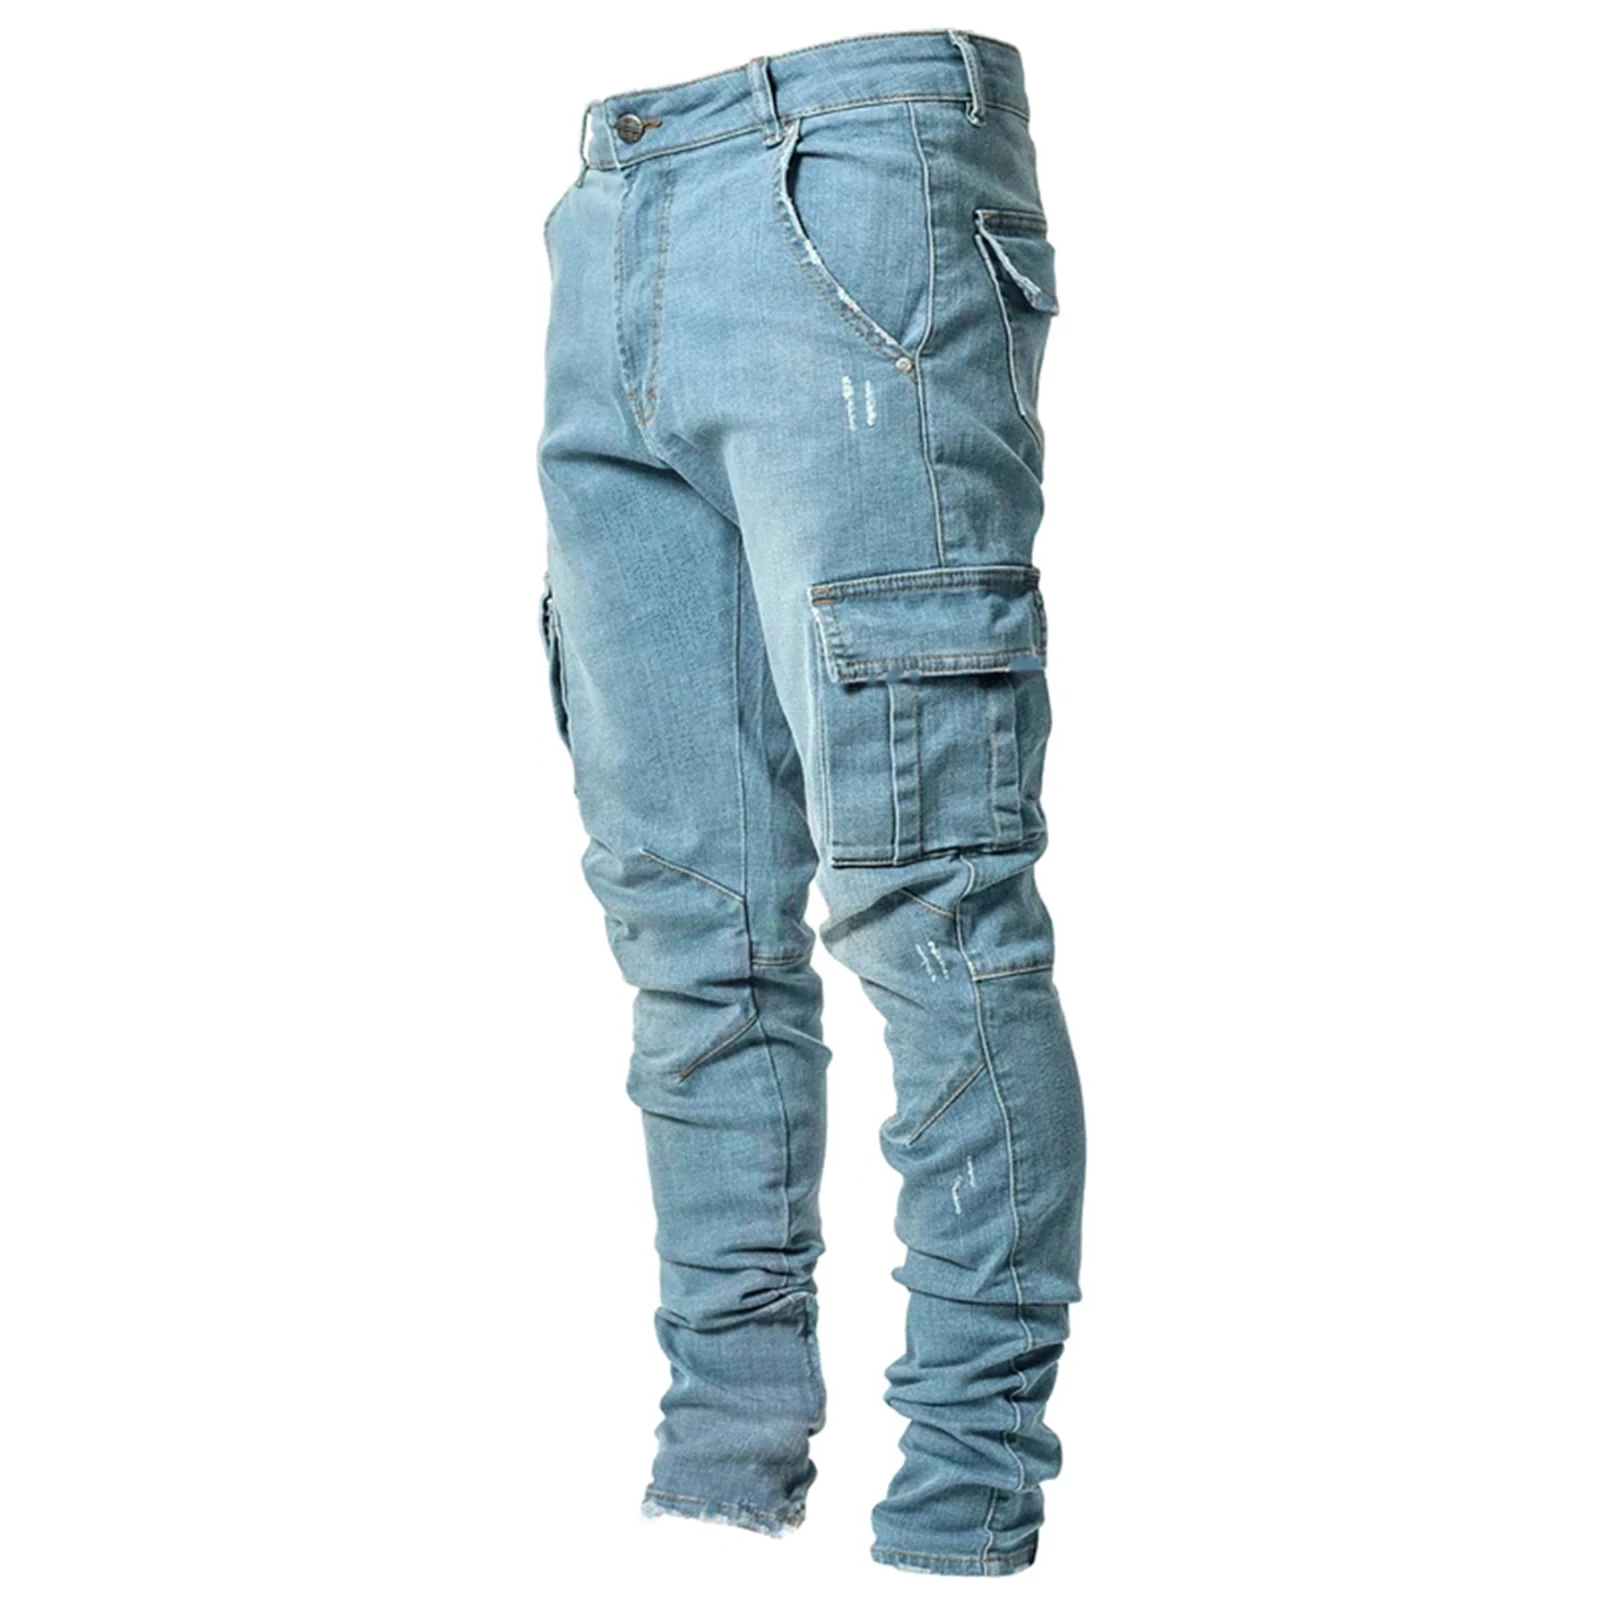 grey jeans mens Adisputent Men's Sweatpants Sexy Hole Jeans Pants Casual Summer Autumn Male Ripped Skinny Trousers Slim Biker Outwears Pants slim jeans